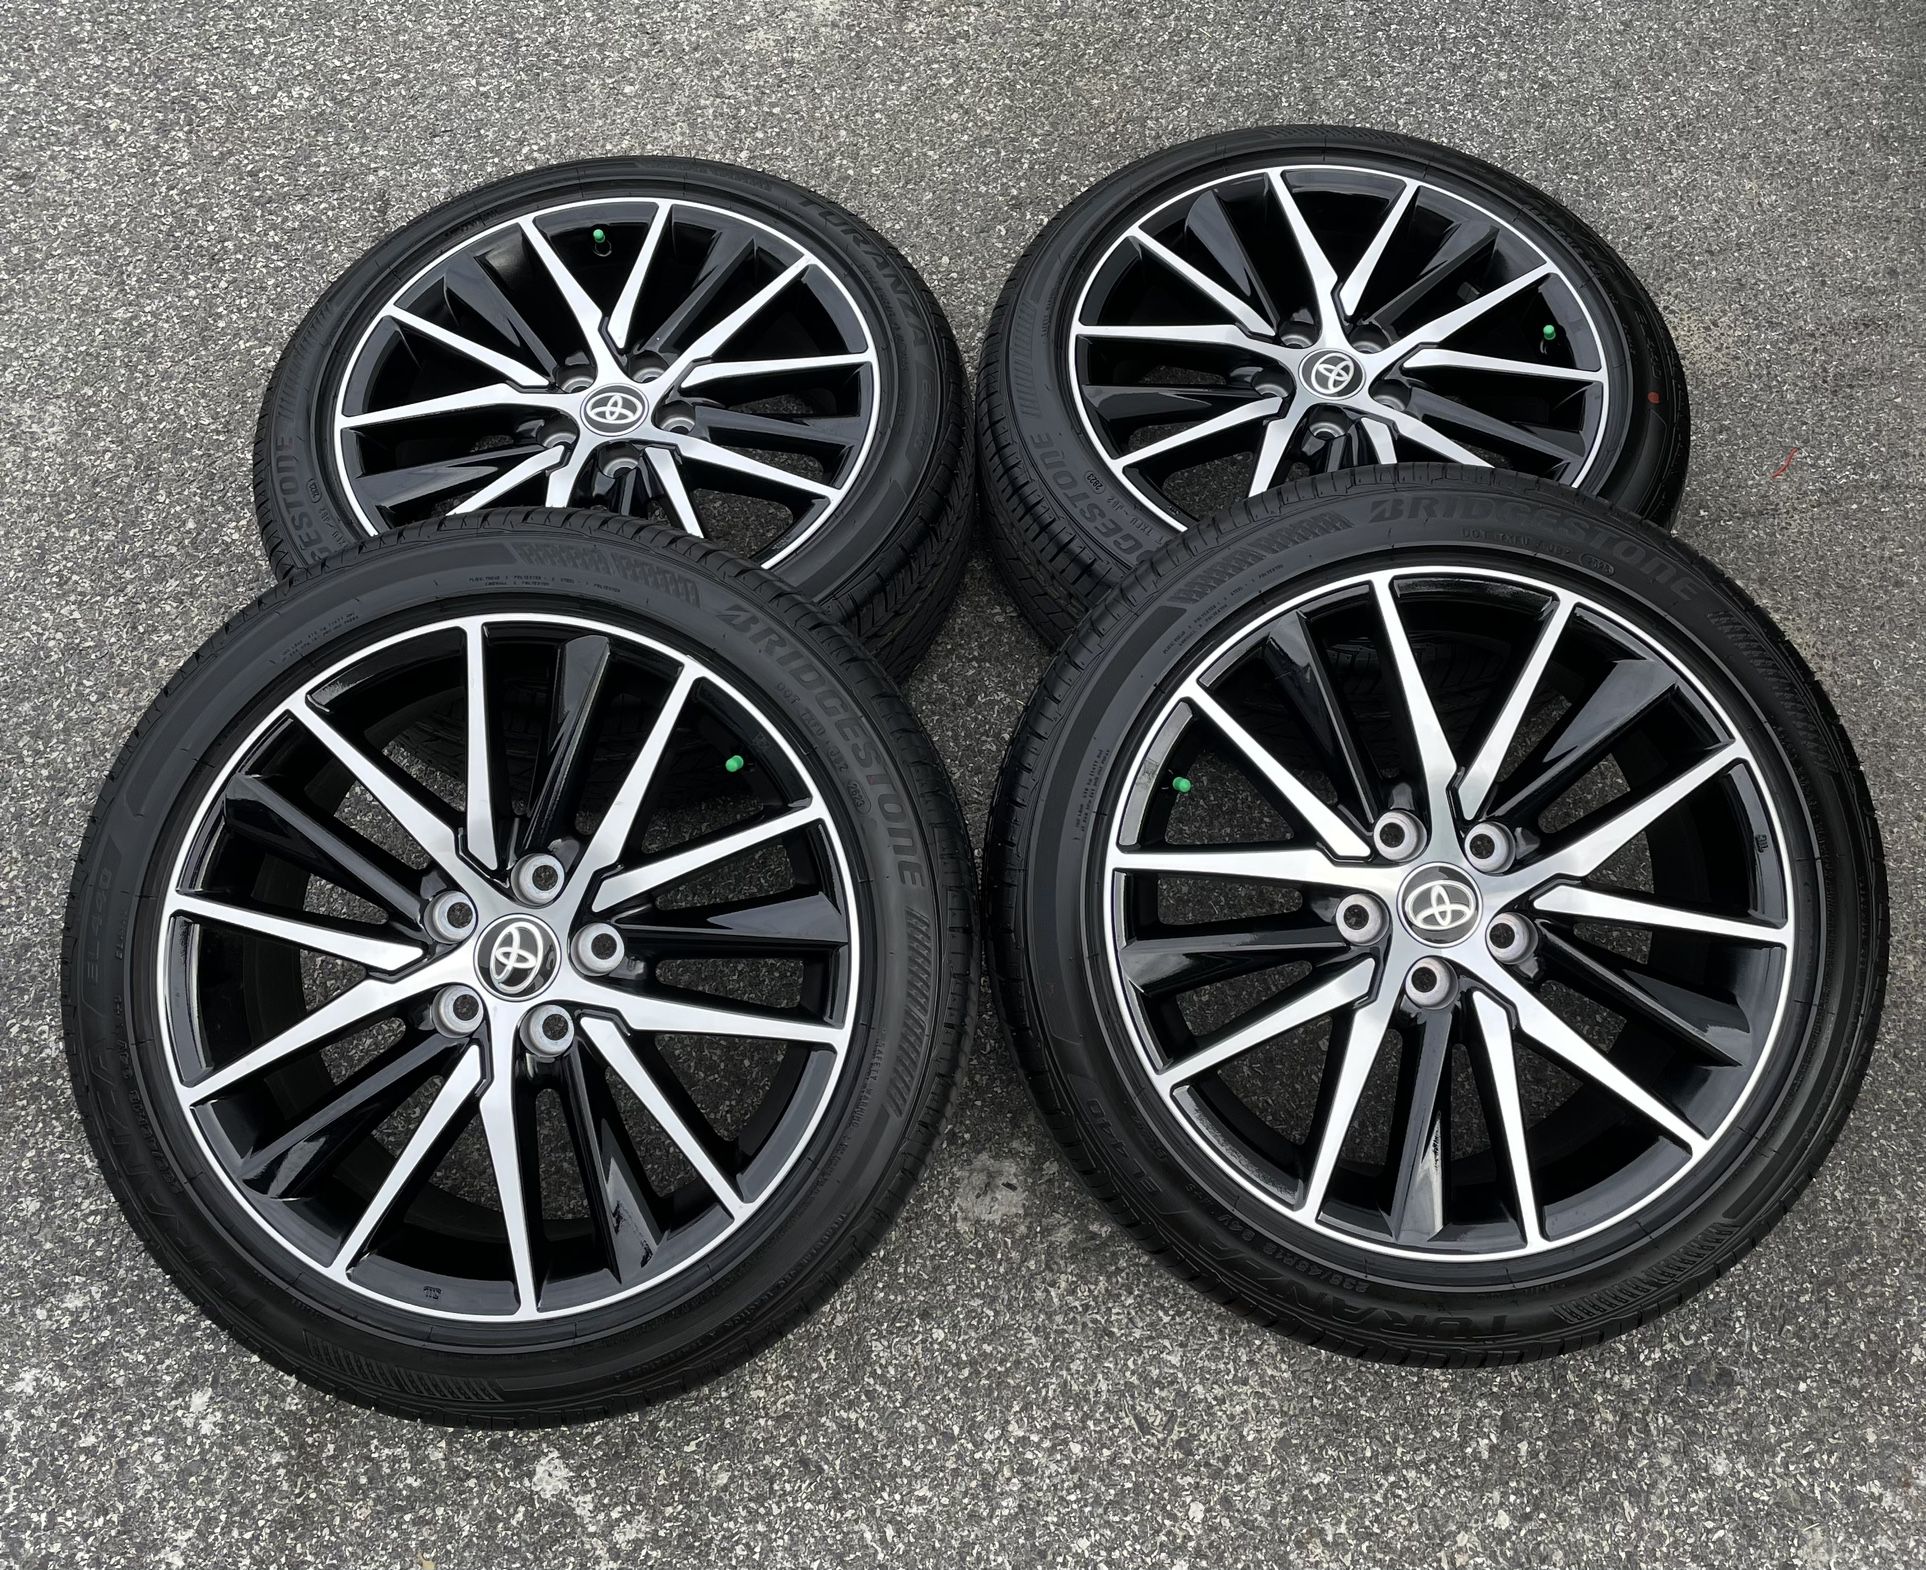 New 2023 18” Toyota Camry Wheels Rims Bridgestone Tires Polished Black 235/45/18 OEM 5x114.3